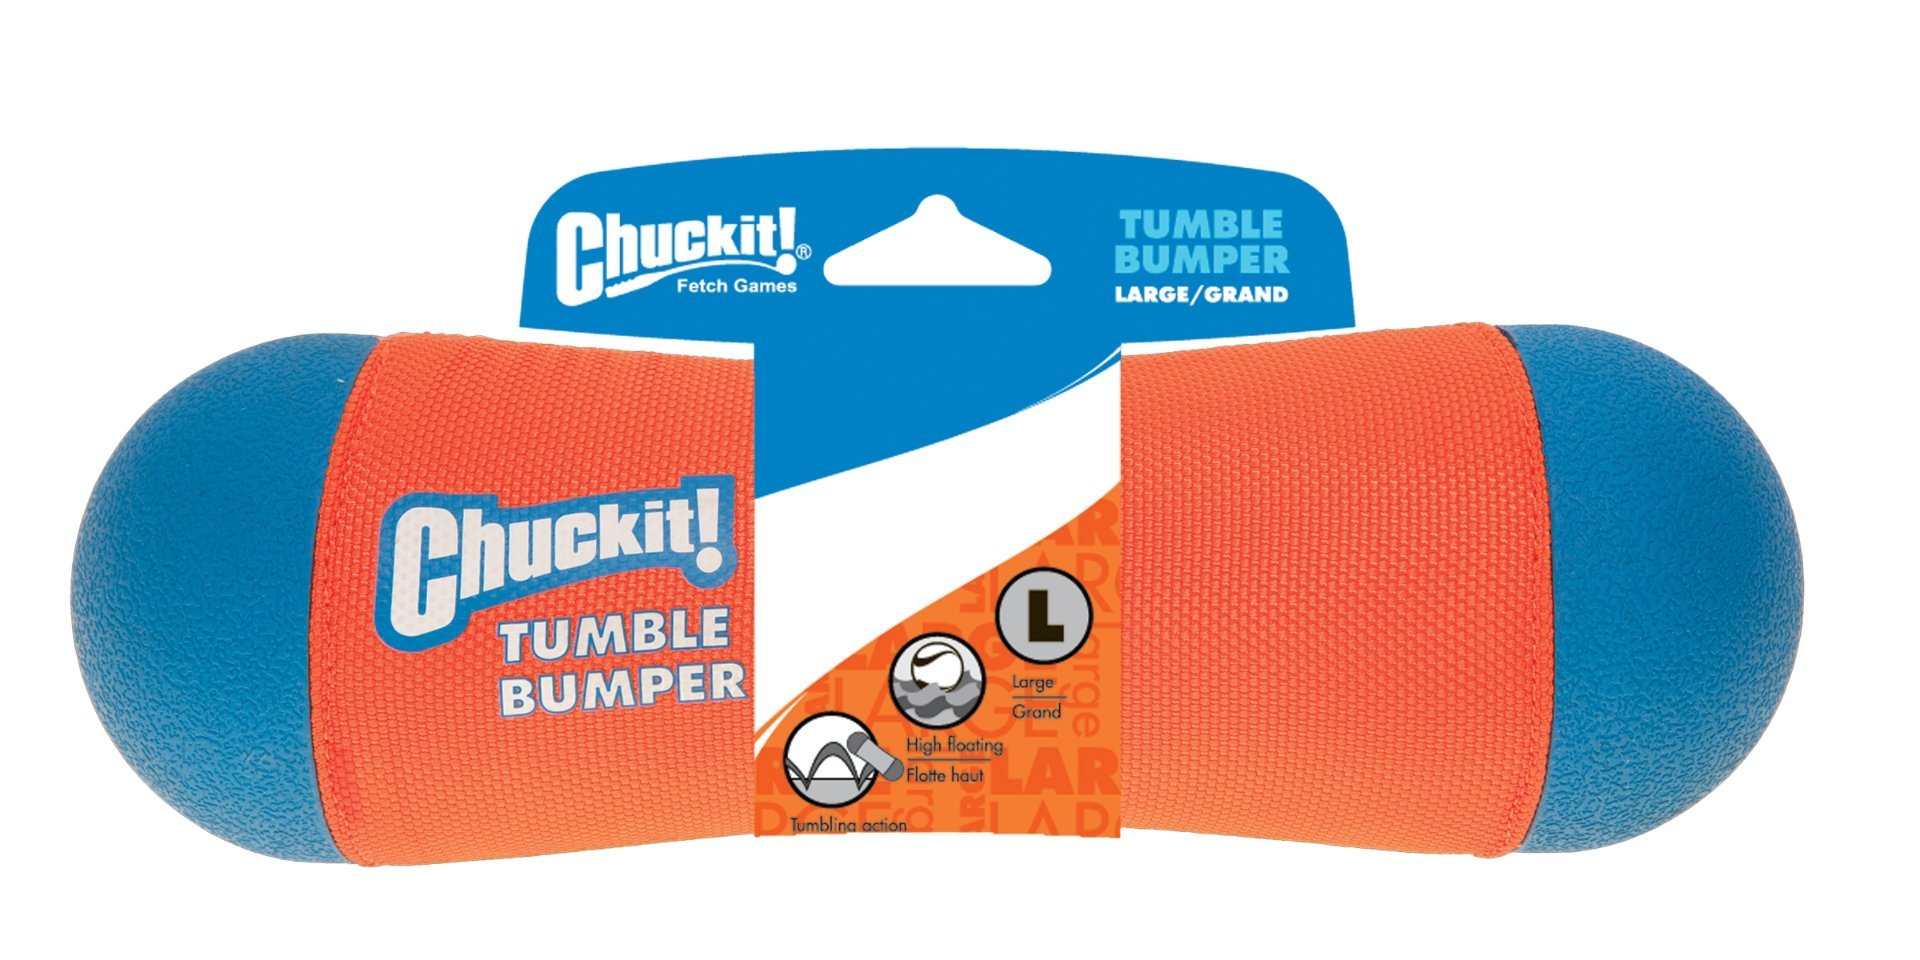 Chuckit-tumble-bumper-L